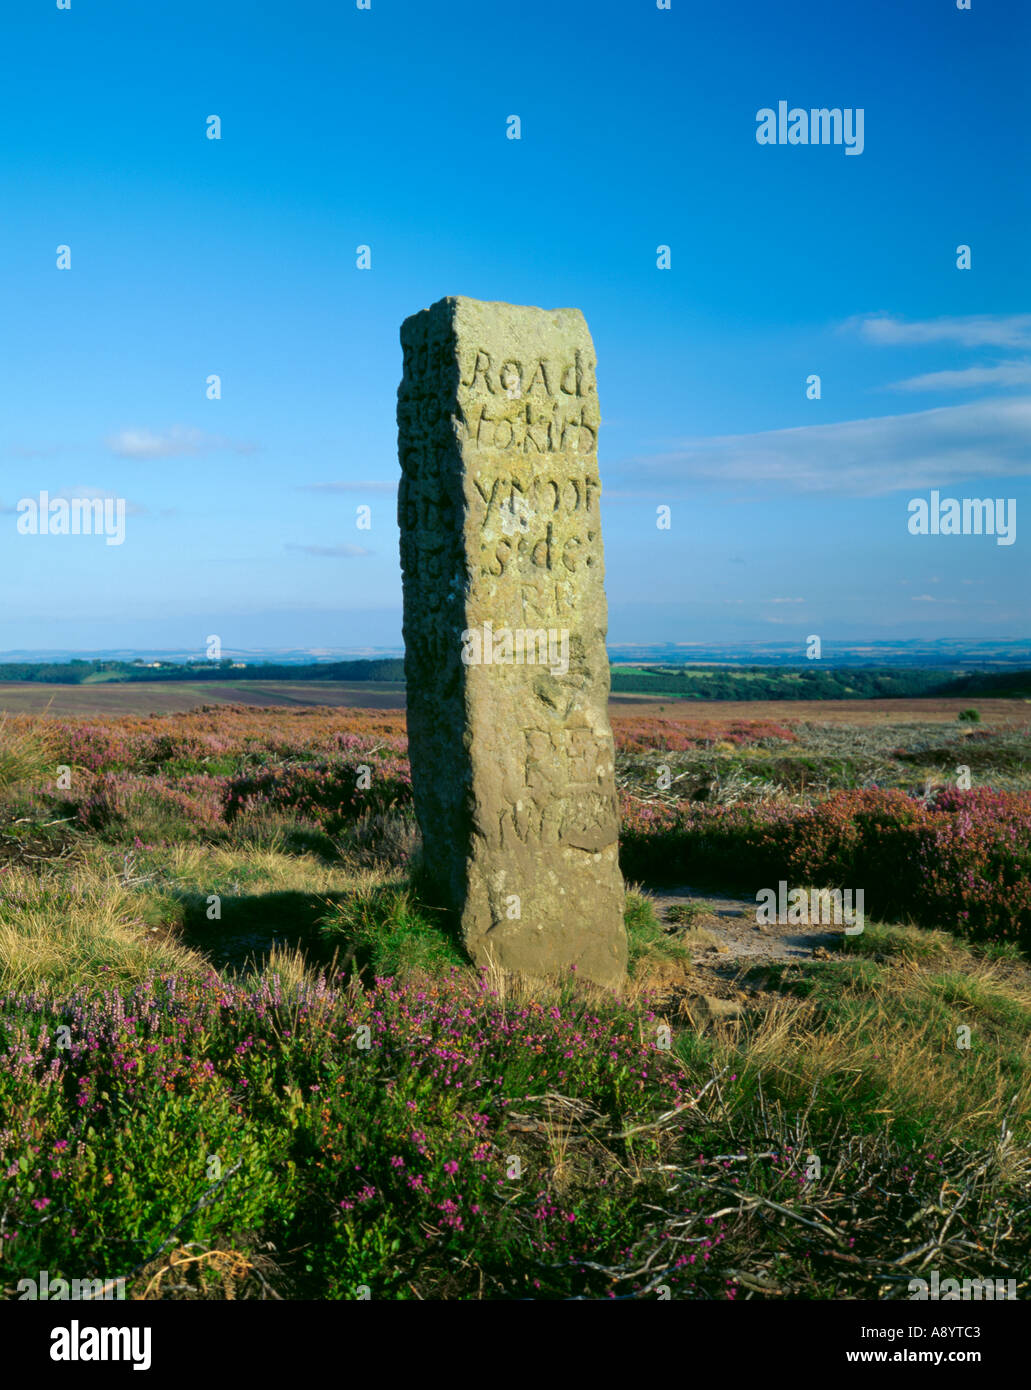 Marker stone on Blakey Ridge pointing the way to Kirkbymoorside, North York Moors, North Yorkshire, England, UK. Stock Photo